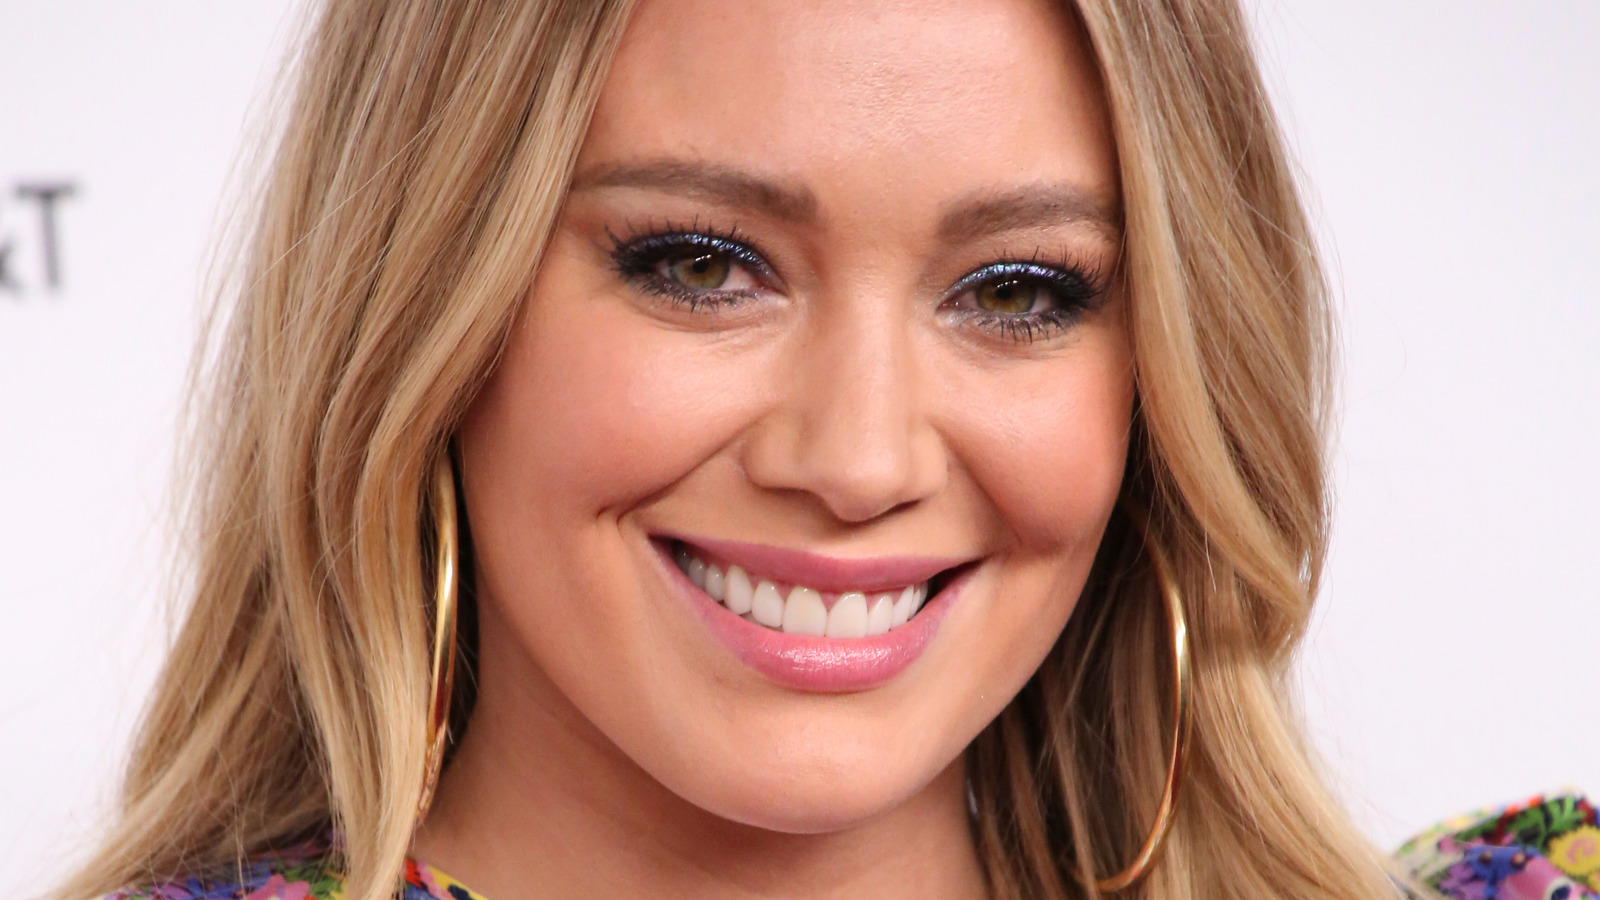 Here's What Hilary Duff Looks Like Going Makeup Free - Celeb 99